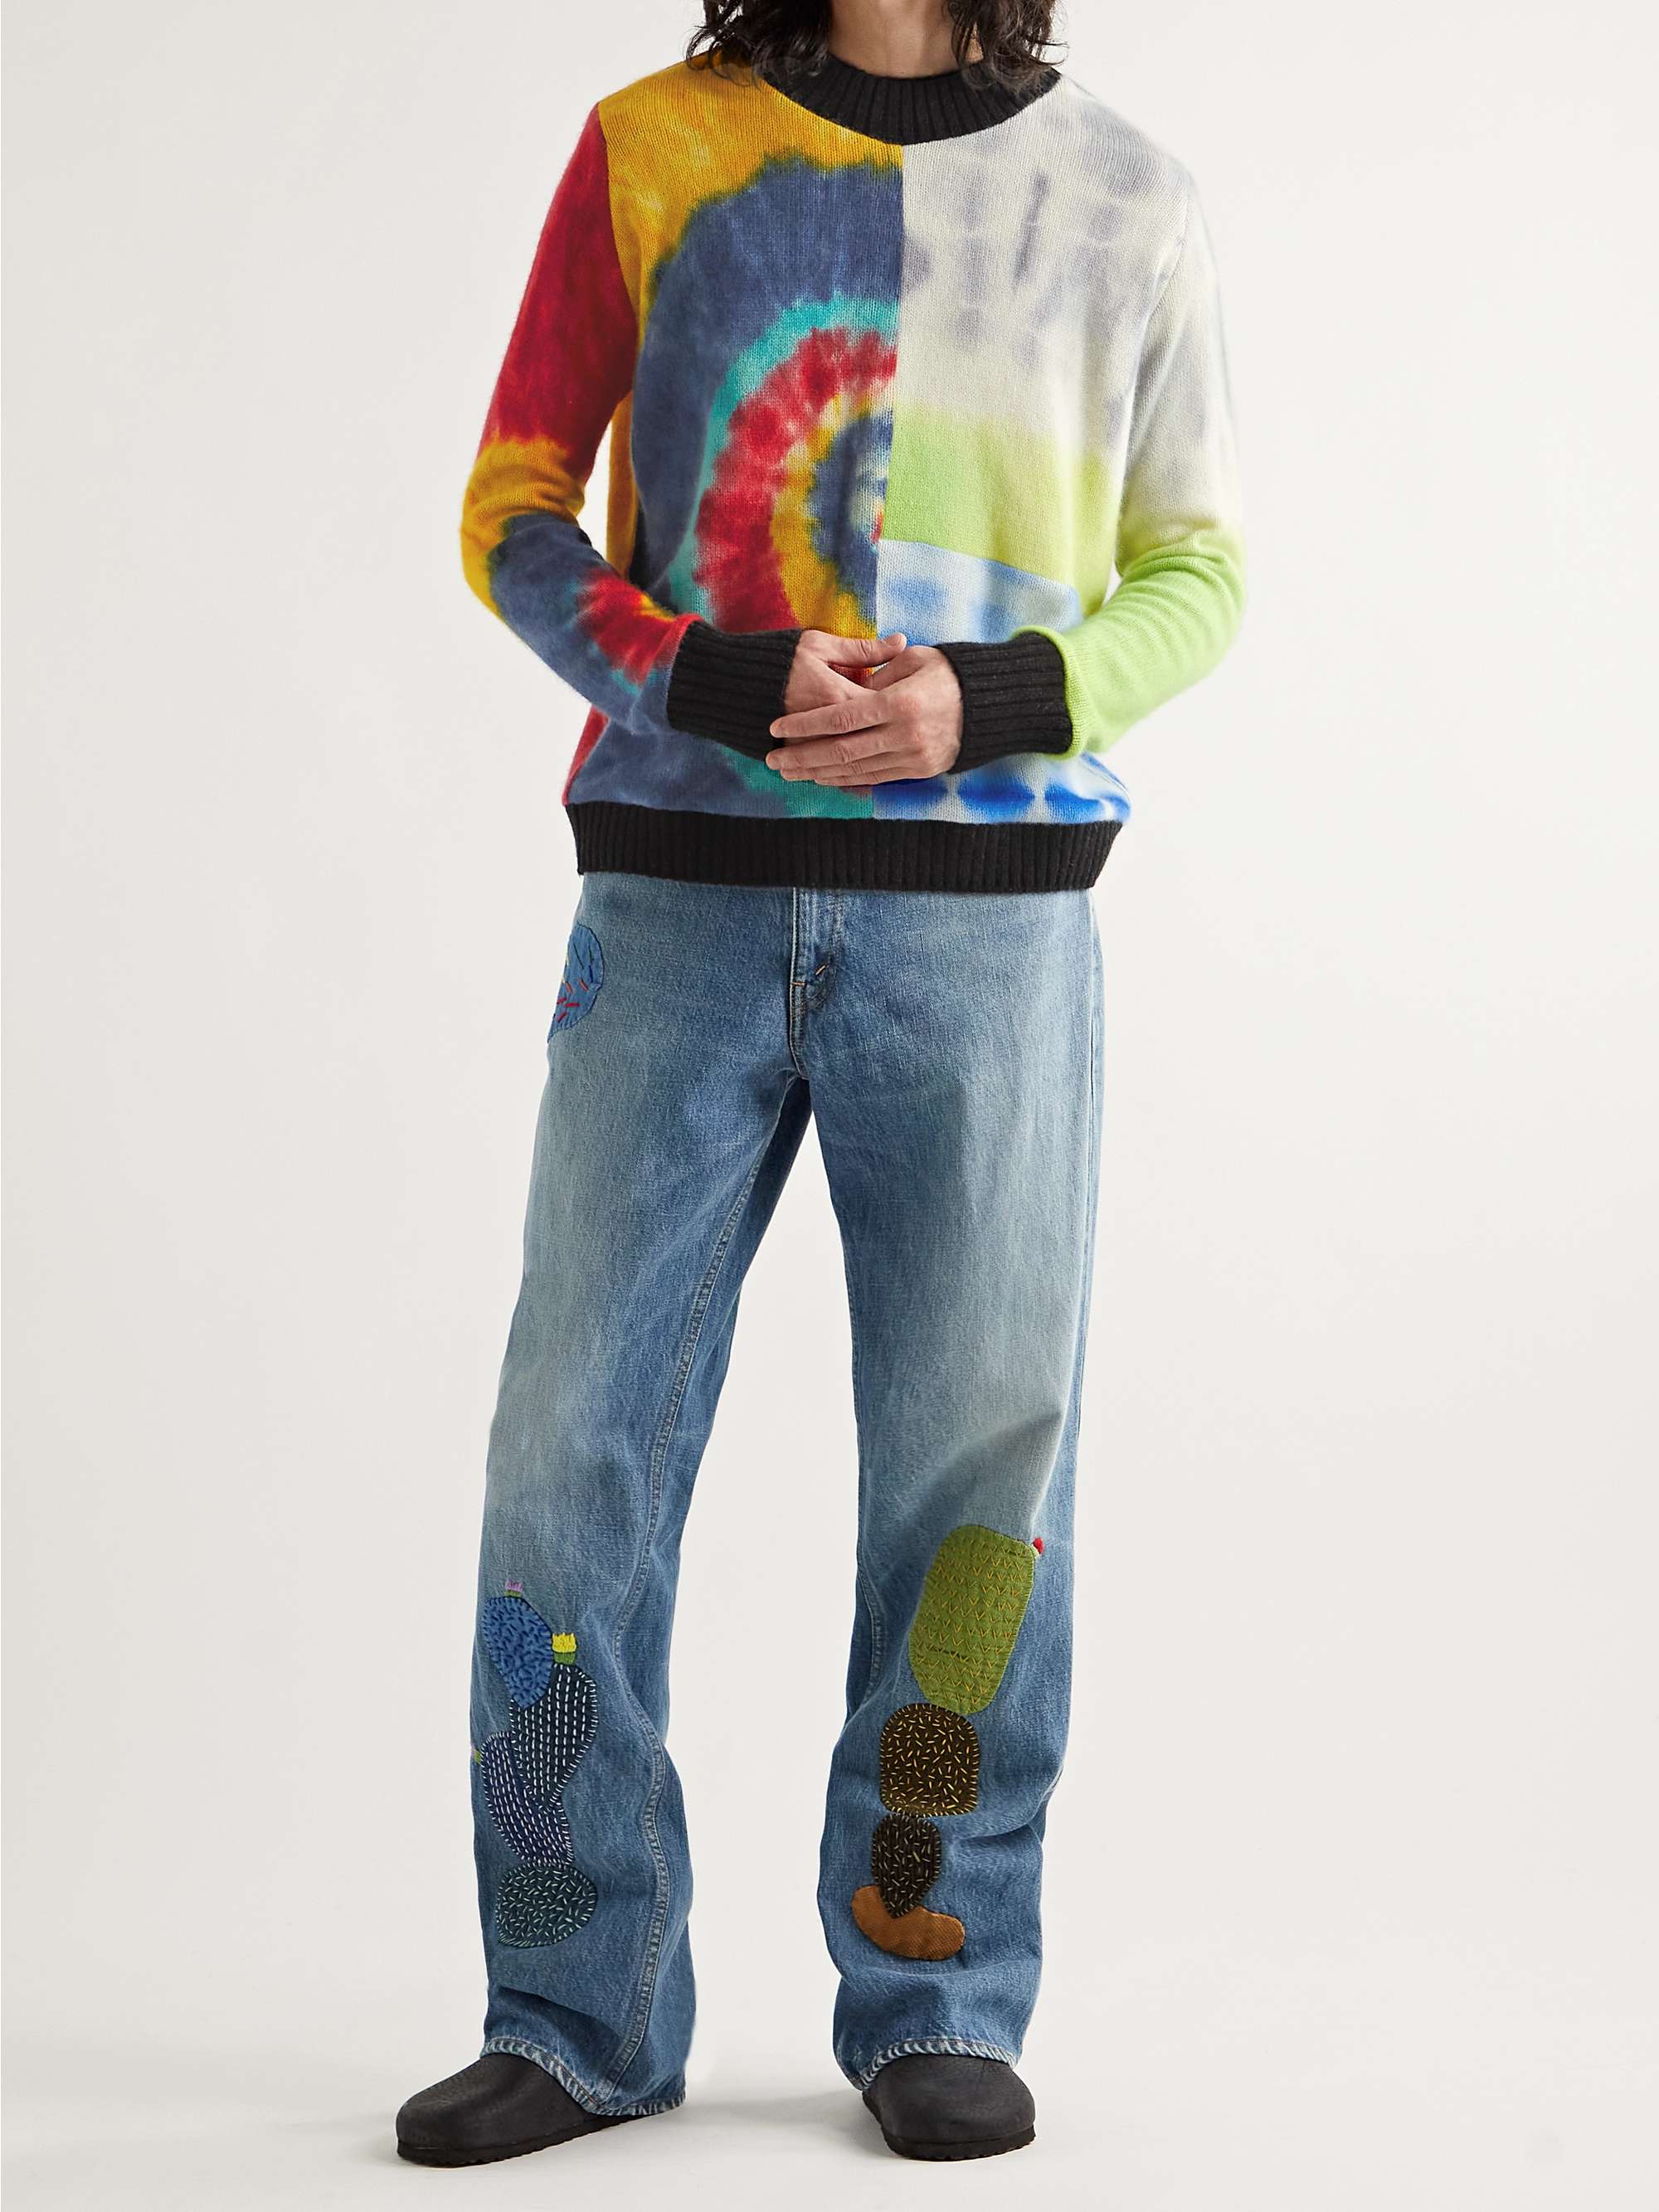 THE ELDER STATESMAN Patchwork Tie-Dyed Cashmere Sweater